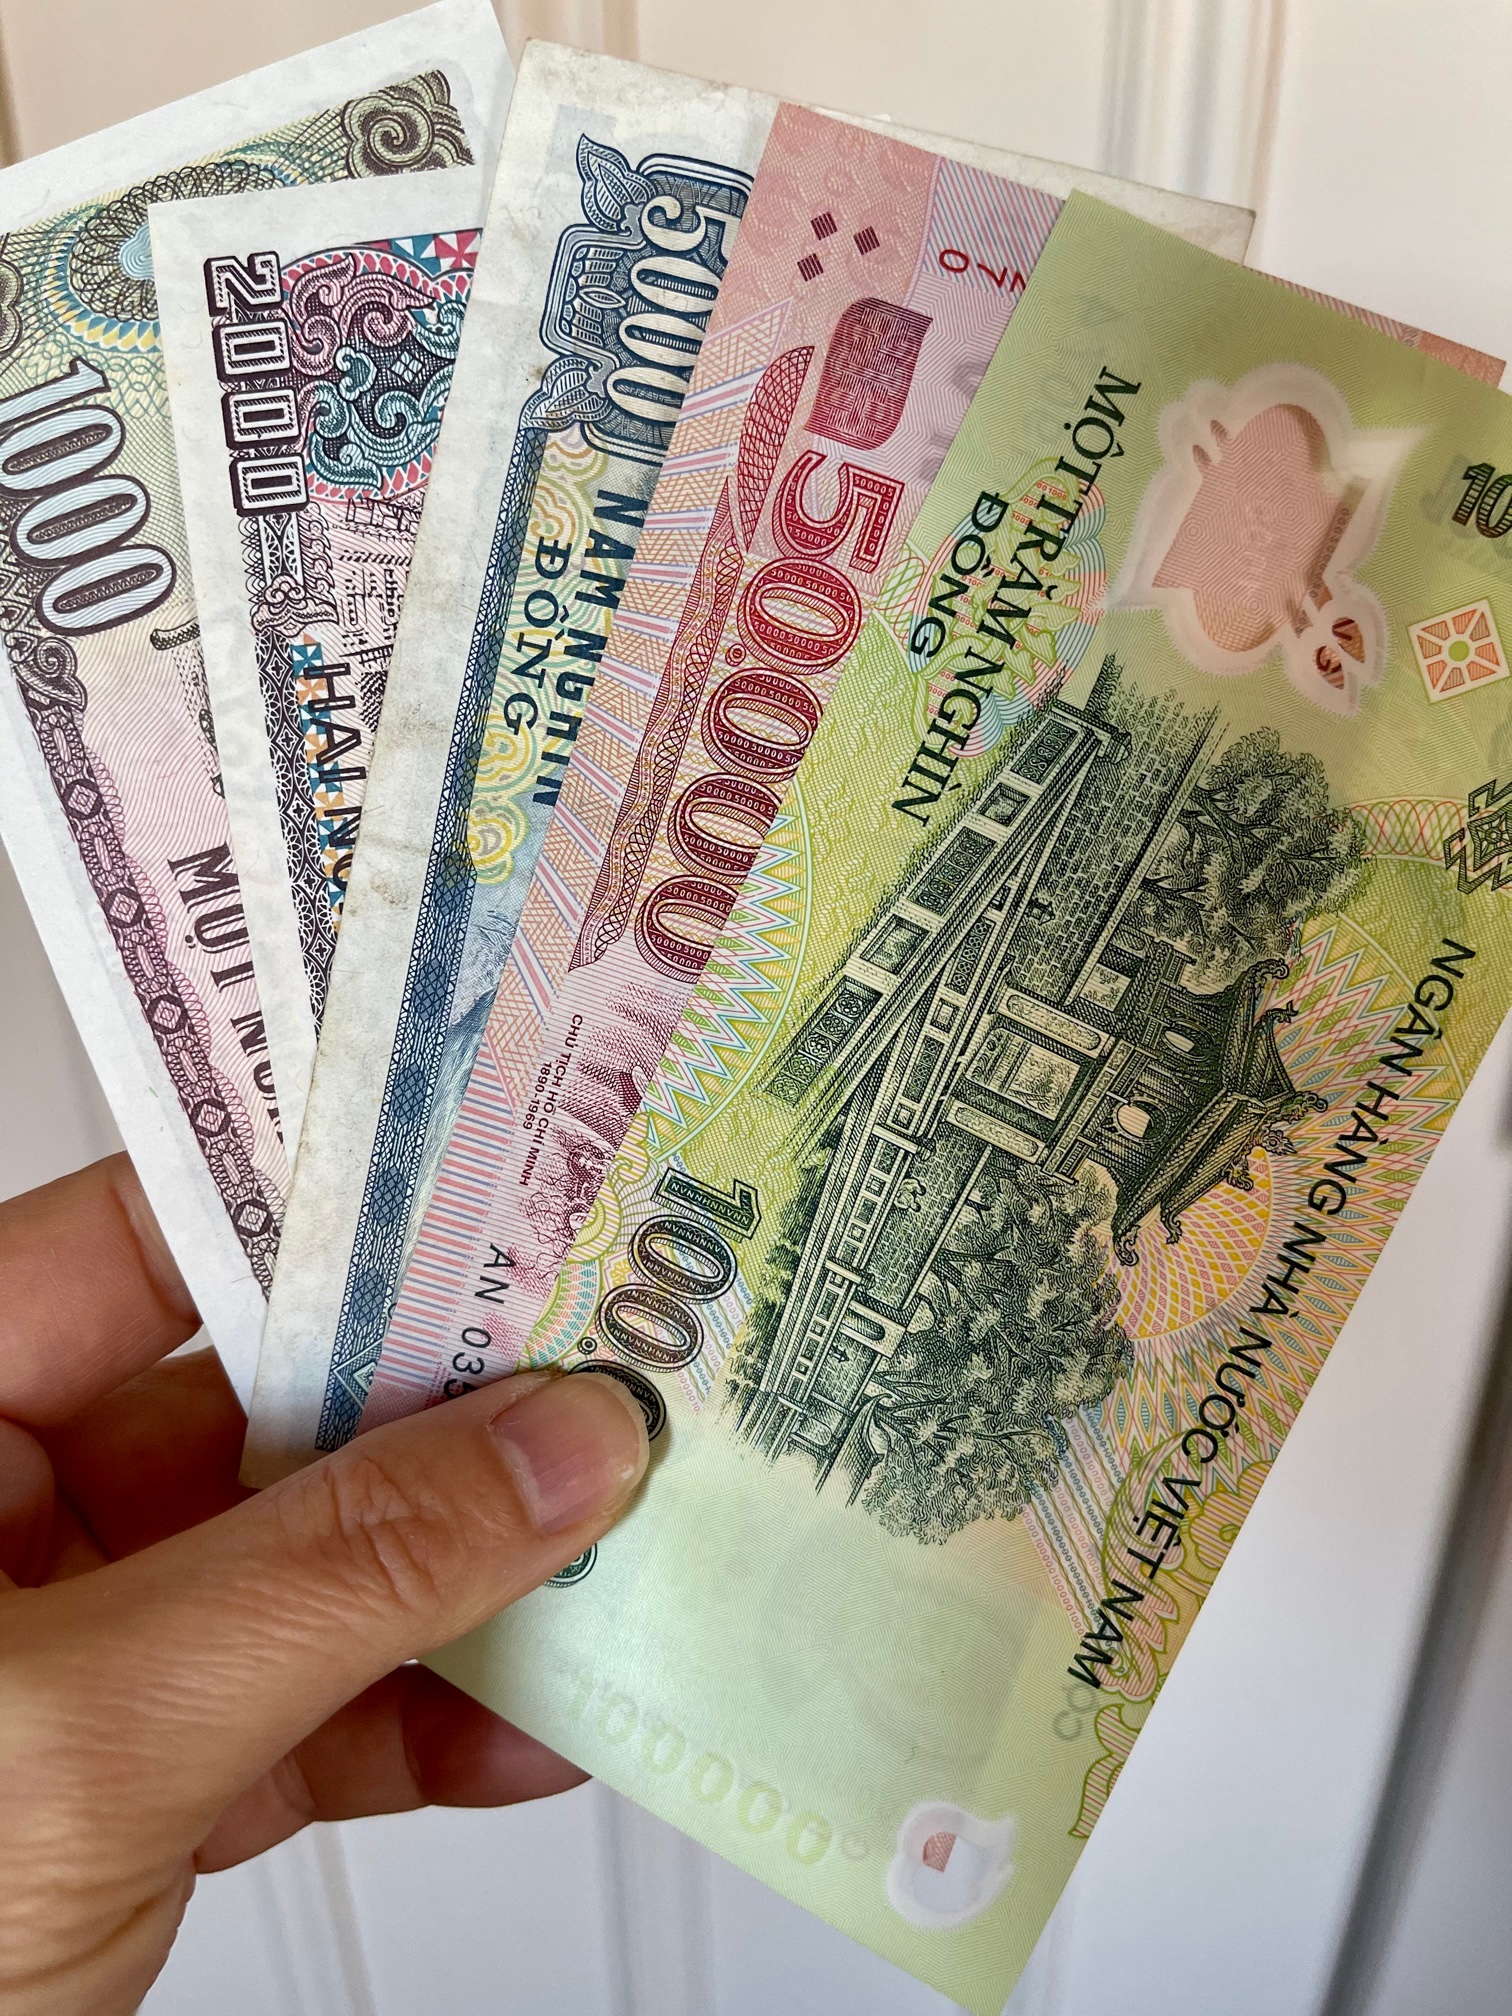 Money, Currency & Payment in Vietnam